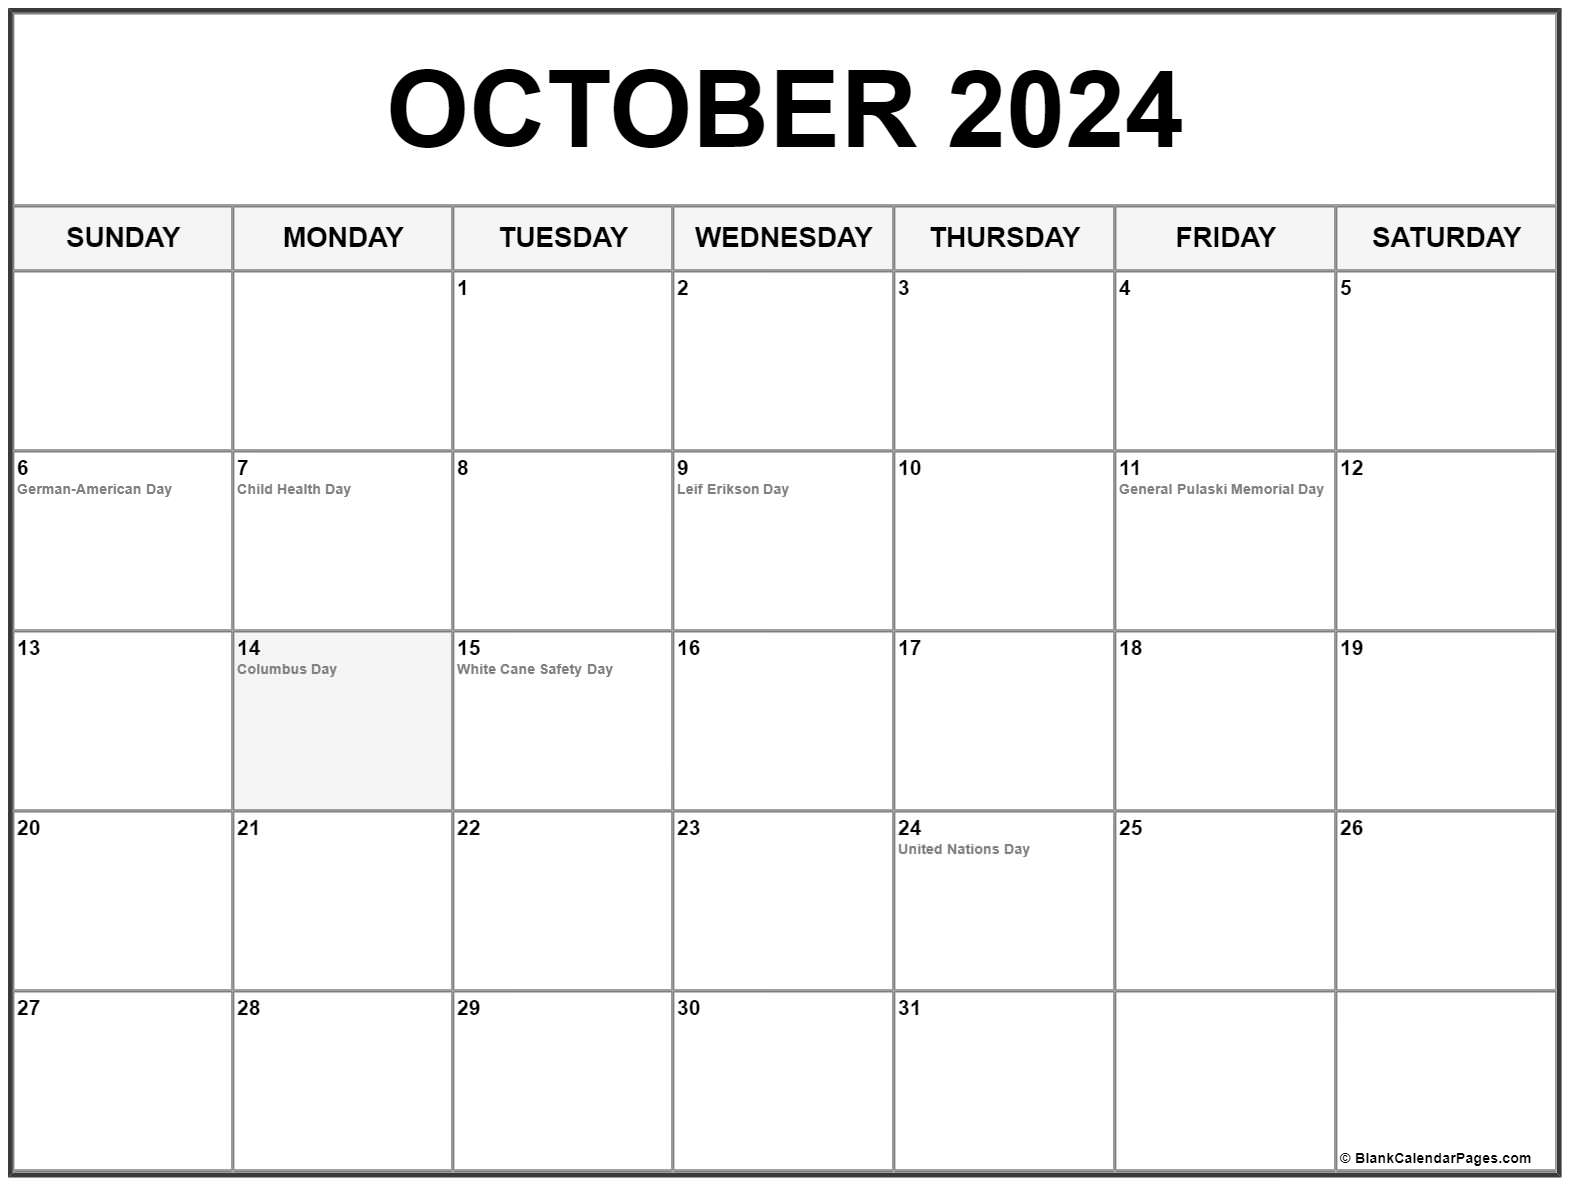 Oct 2022 Calendar With Holidays October 2022 With Holidays Calendar